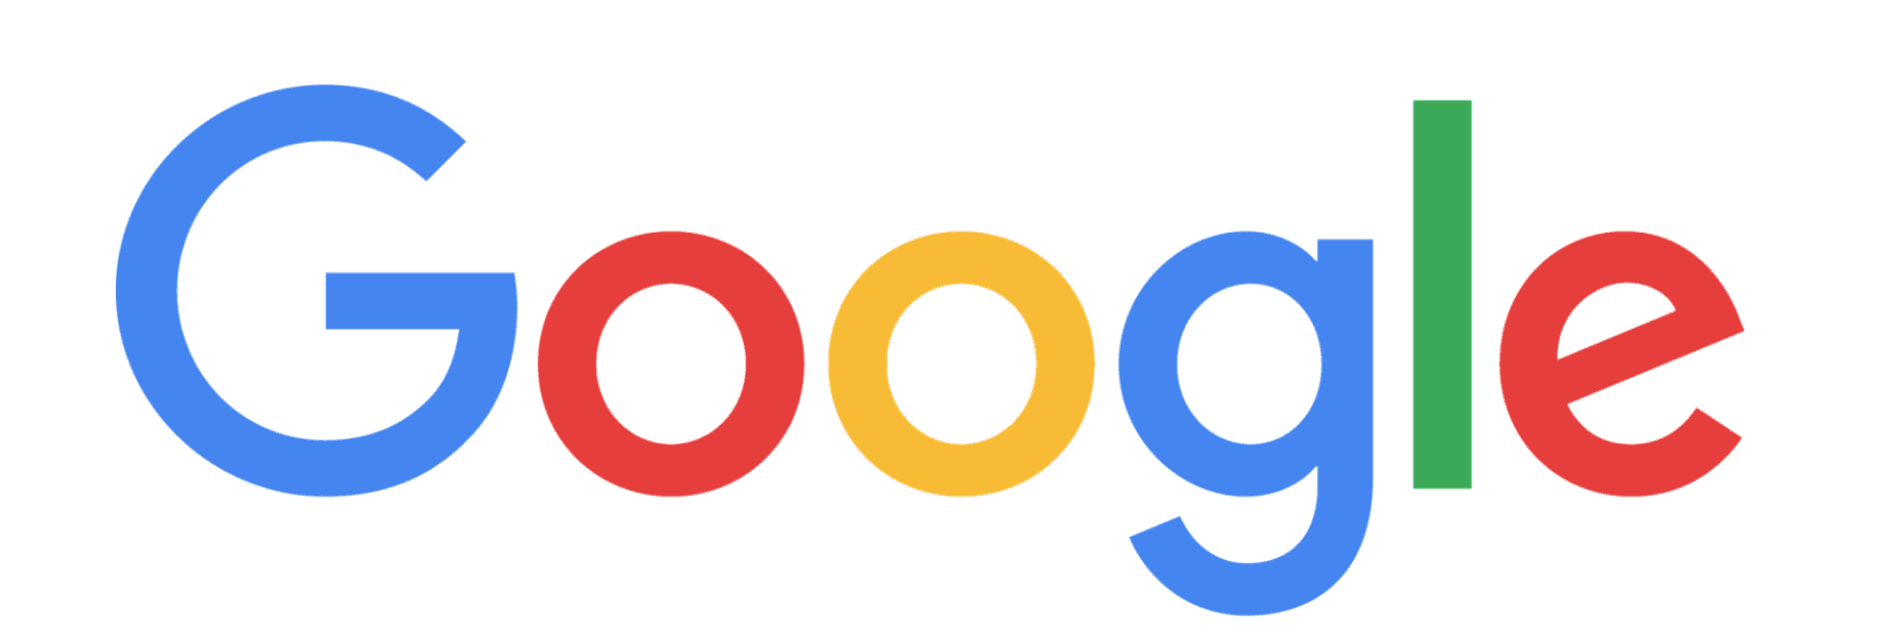 Google logo (symbol R)